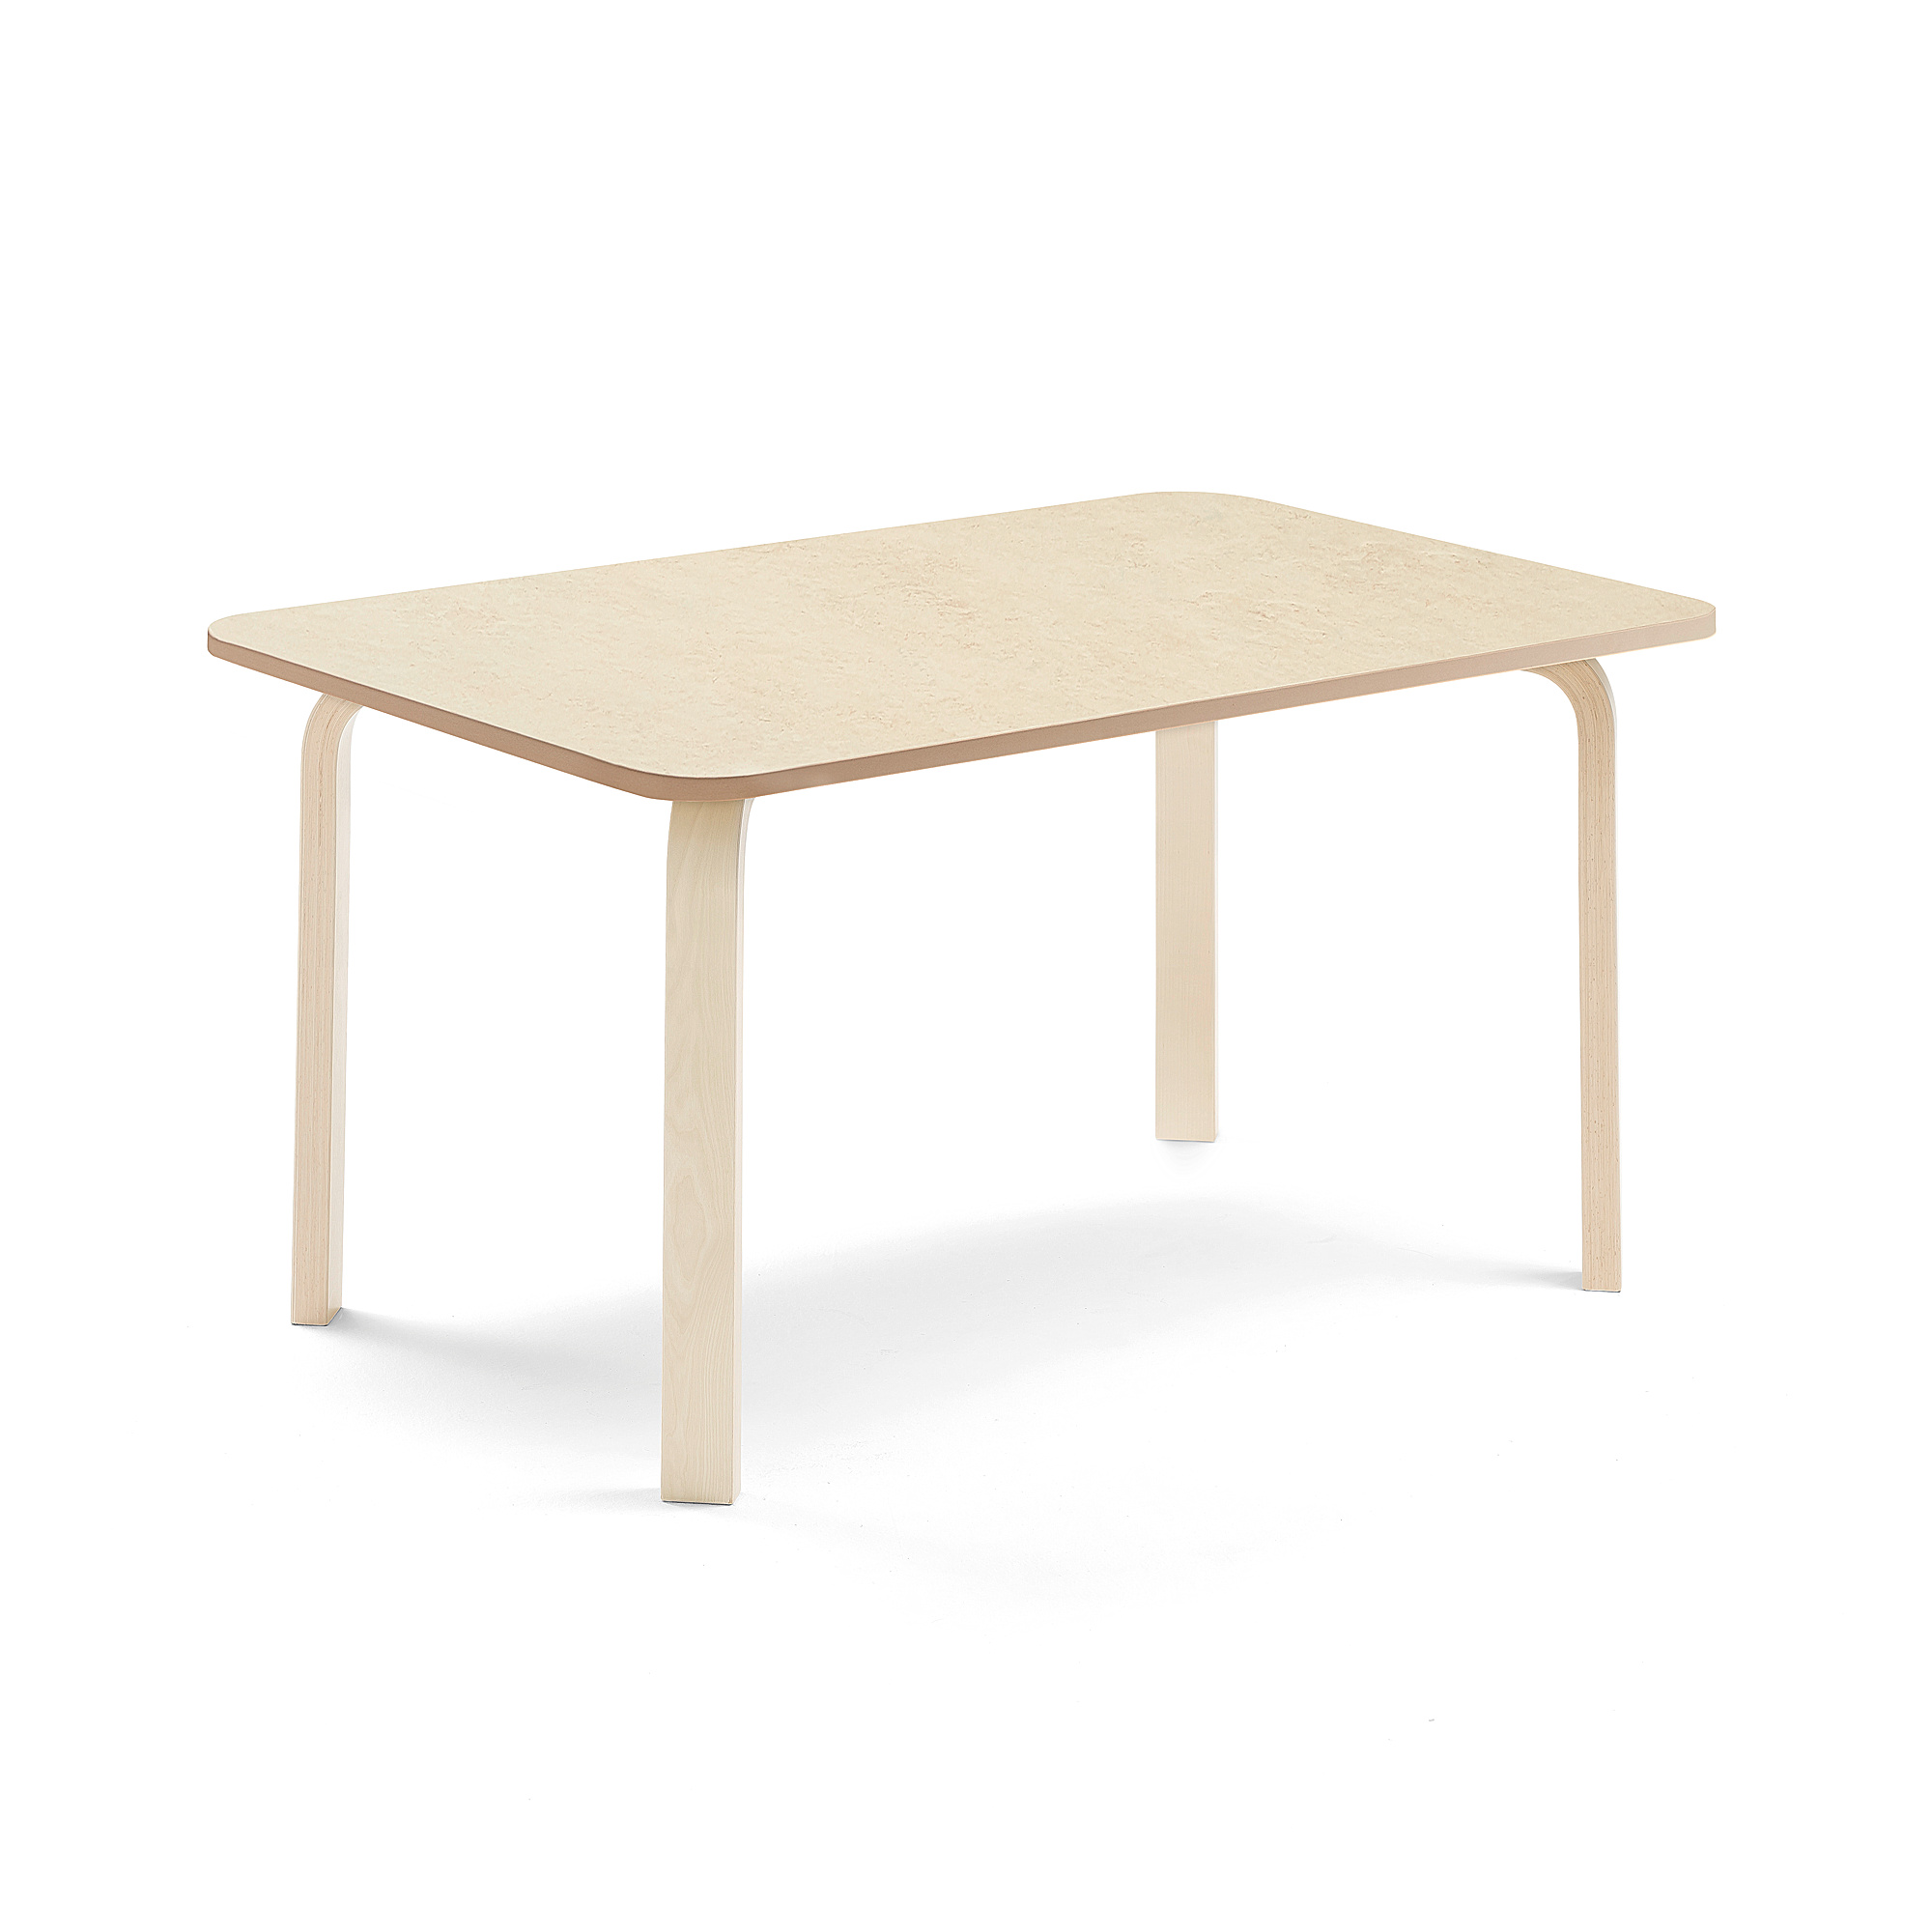 Stůl ELTON, 1200x600x590 mm, bříza, akustické linoleum, béžová